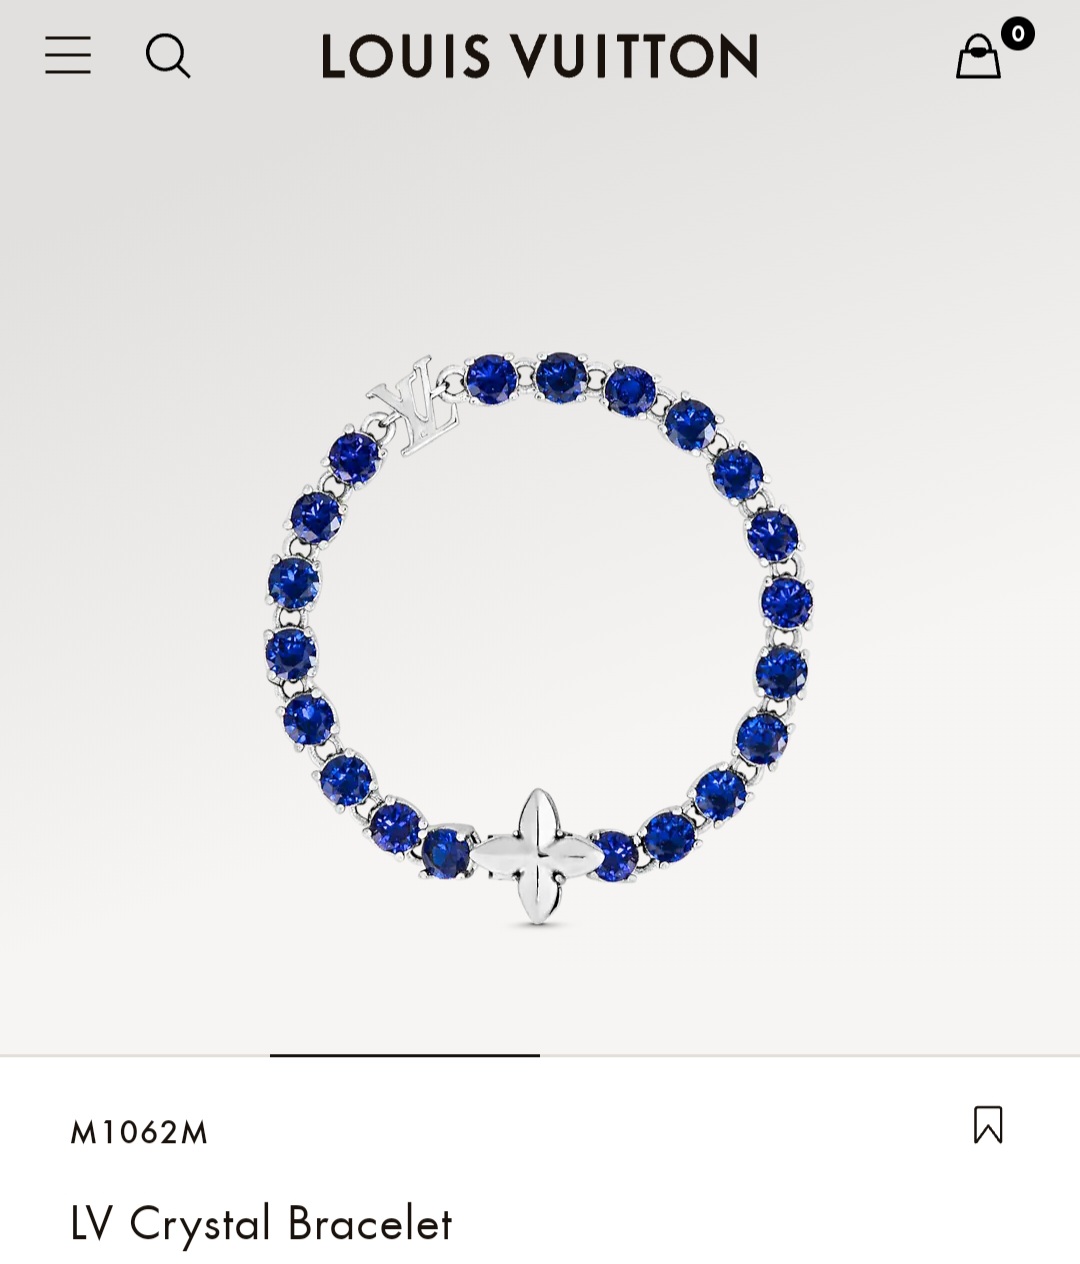 LV Crystal Bracelet